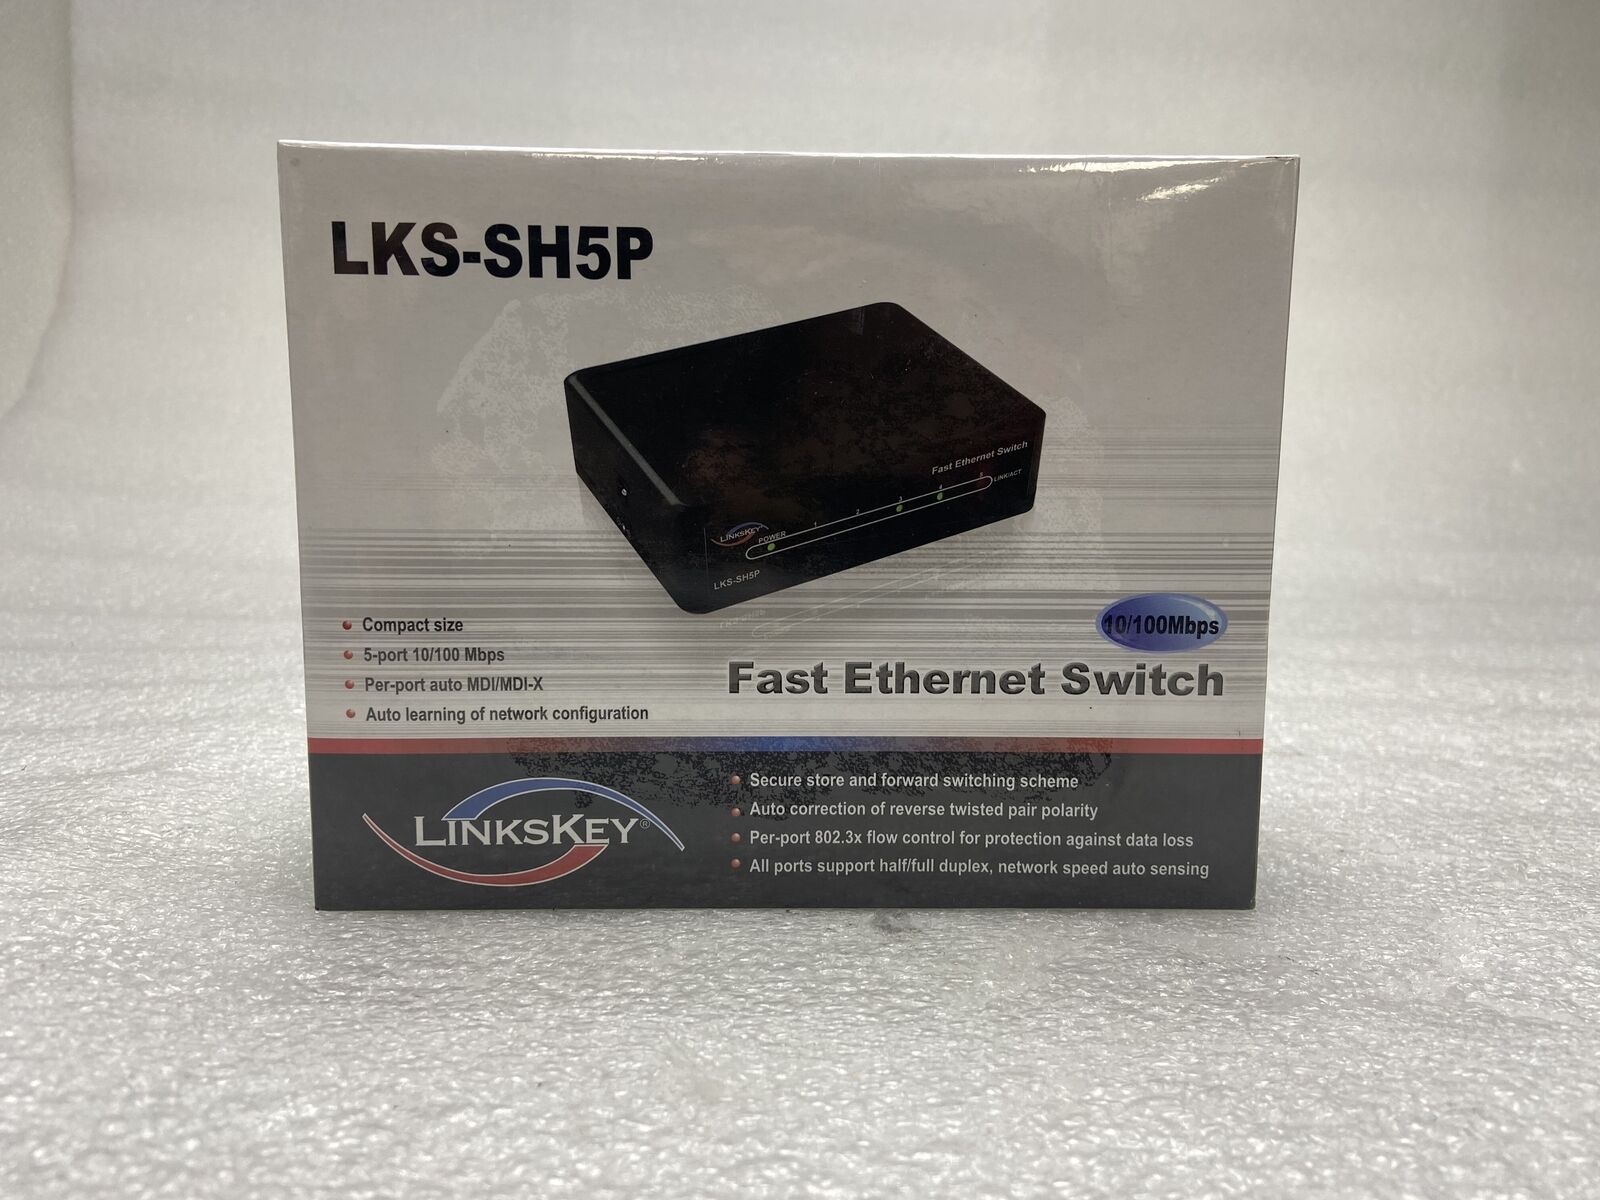 Links key 5-port 10/100 Mbps fast ethernet switch LKS-SH5P new sealed- 